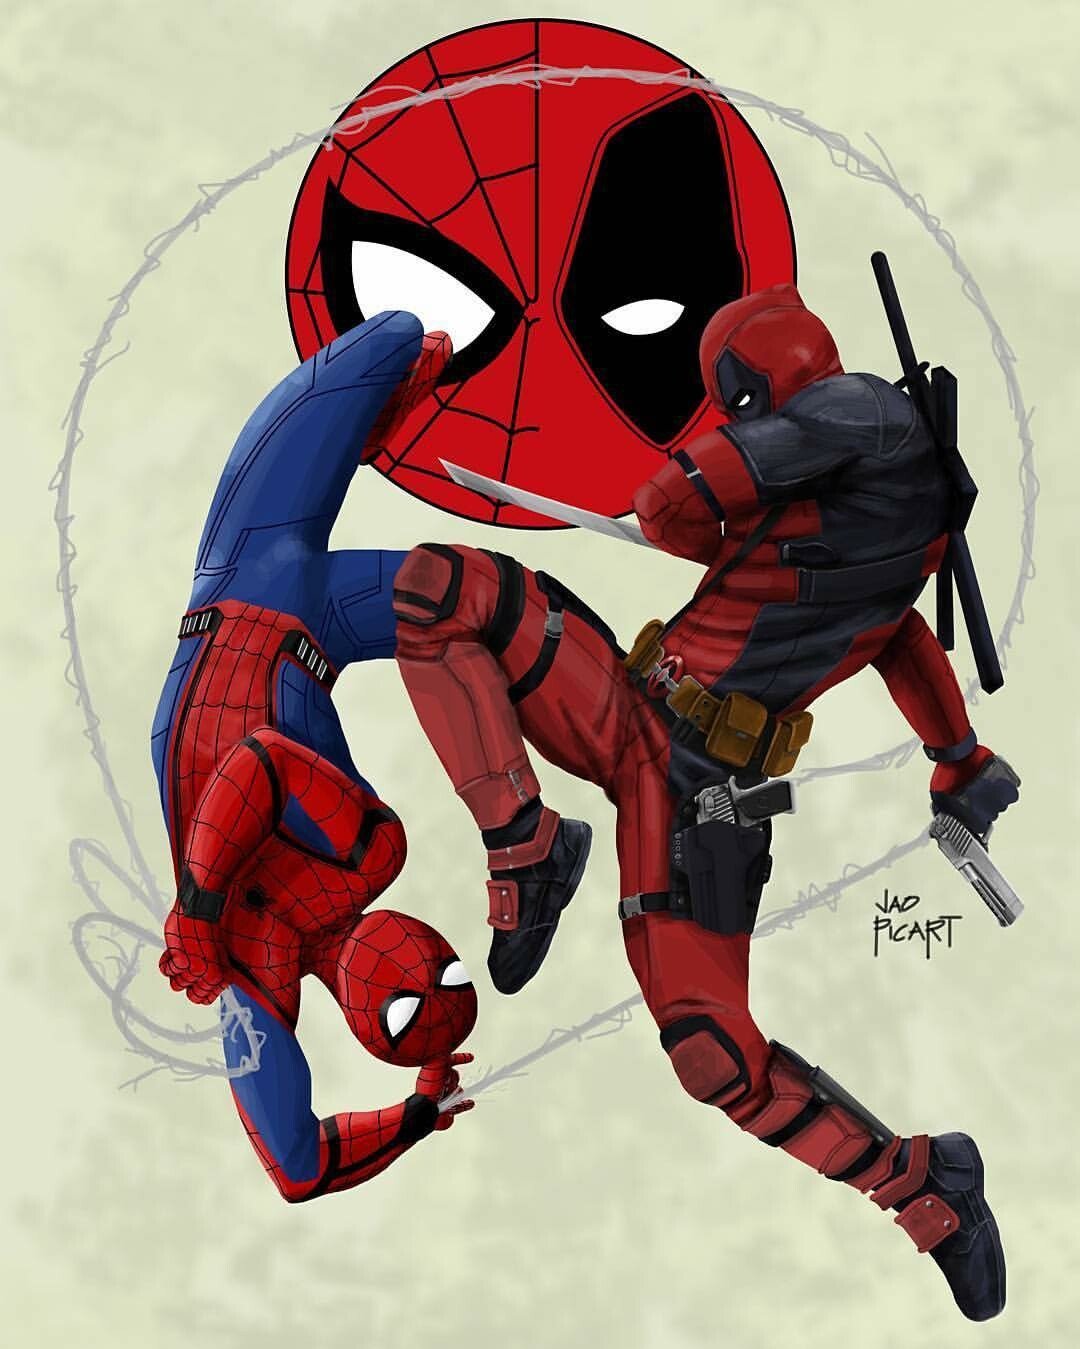 Spiderman X Deadpool wallpaper by ALLINONE12  Download on ZEDGE  a447